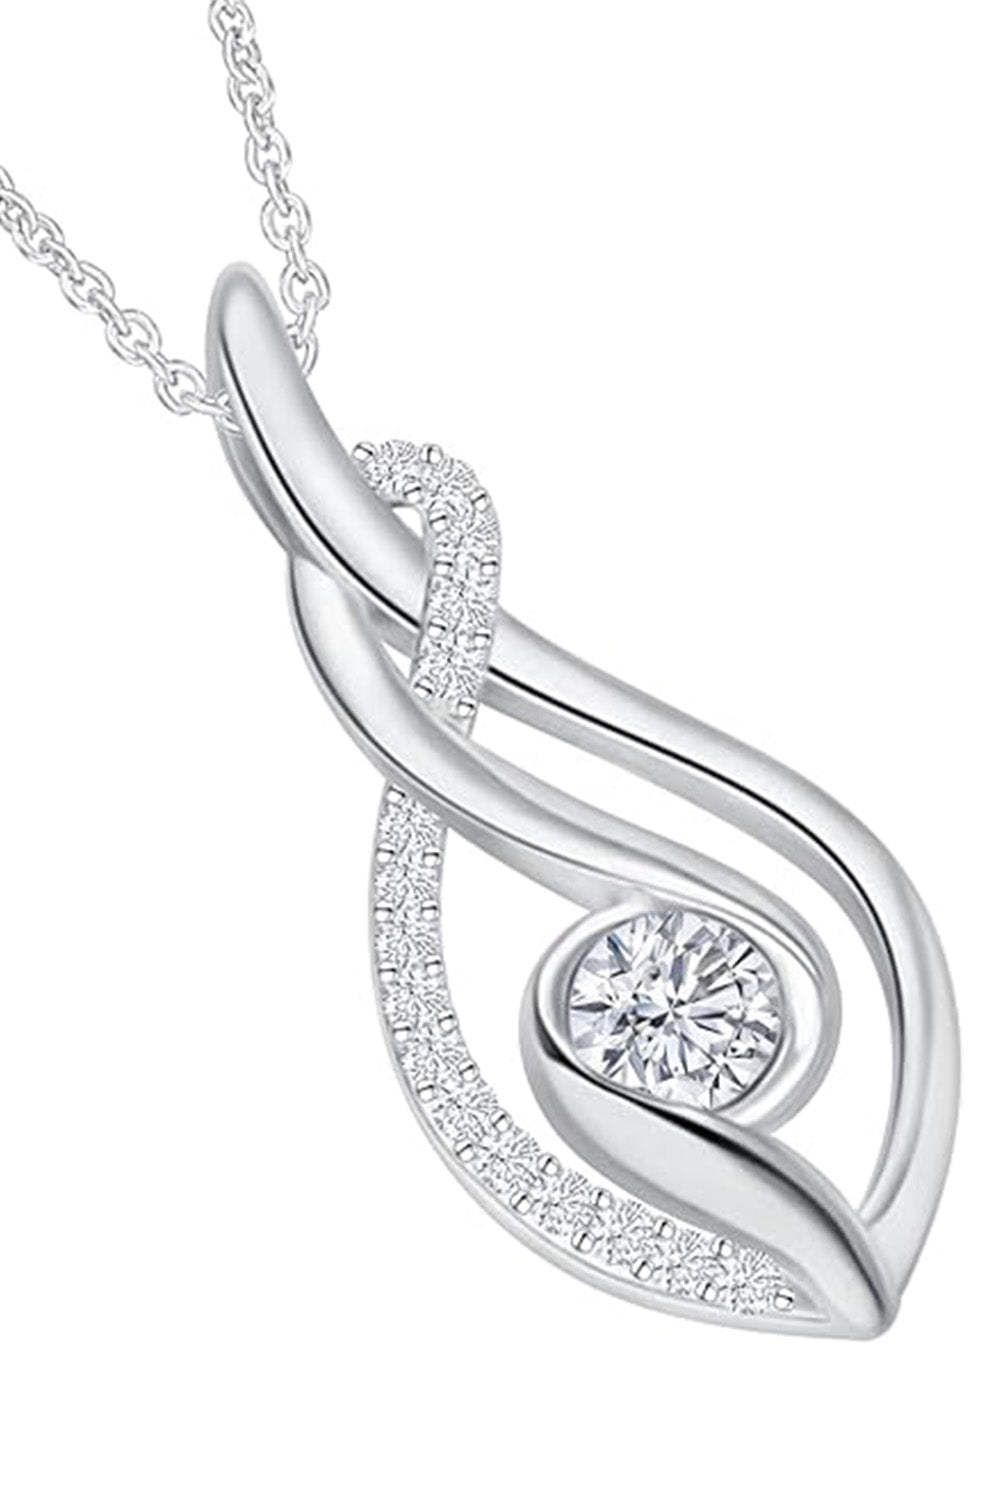 Premium 1 Carat Moissanite Diamond Infinity Pendant Necklace in 18k Gold Plated.